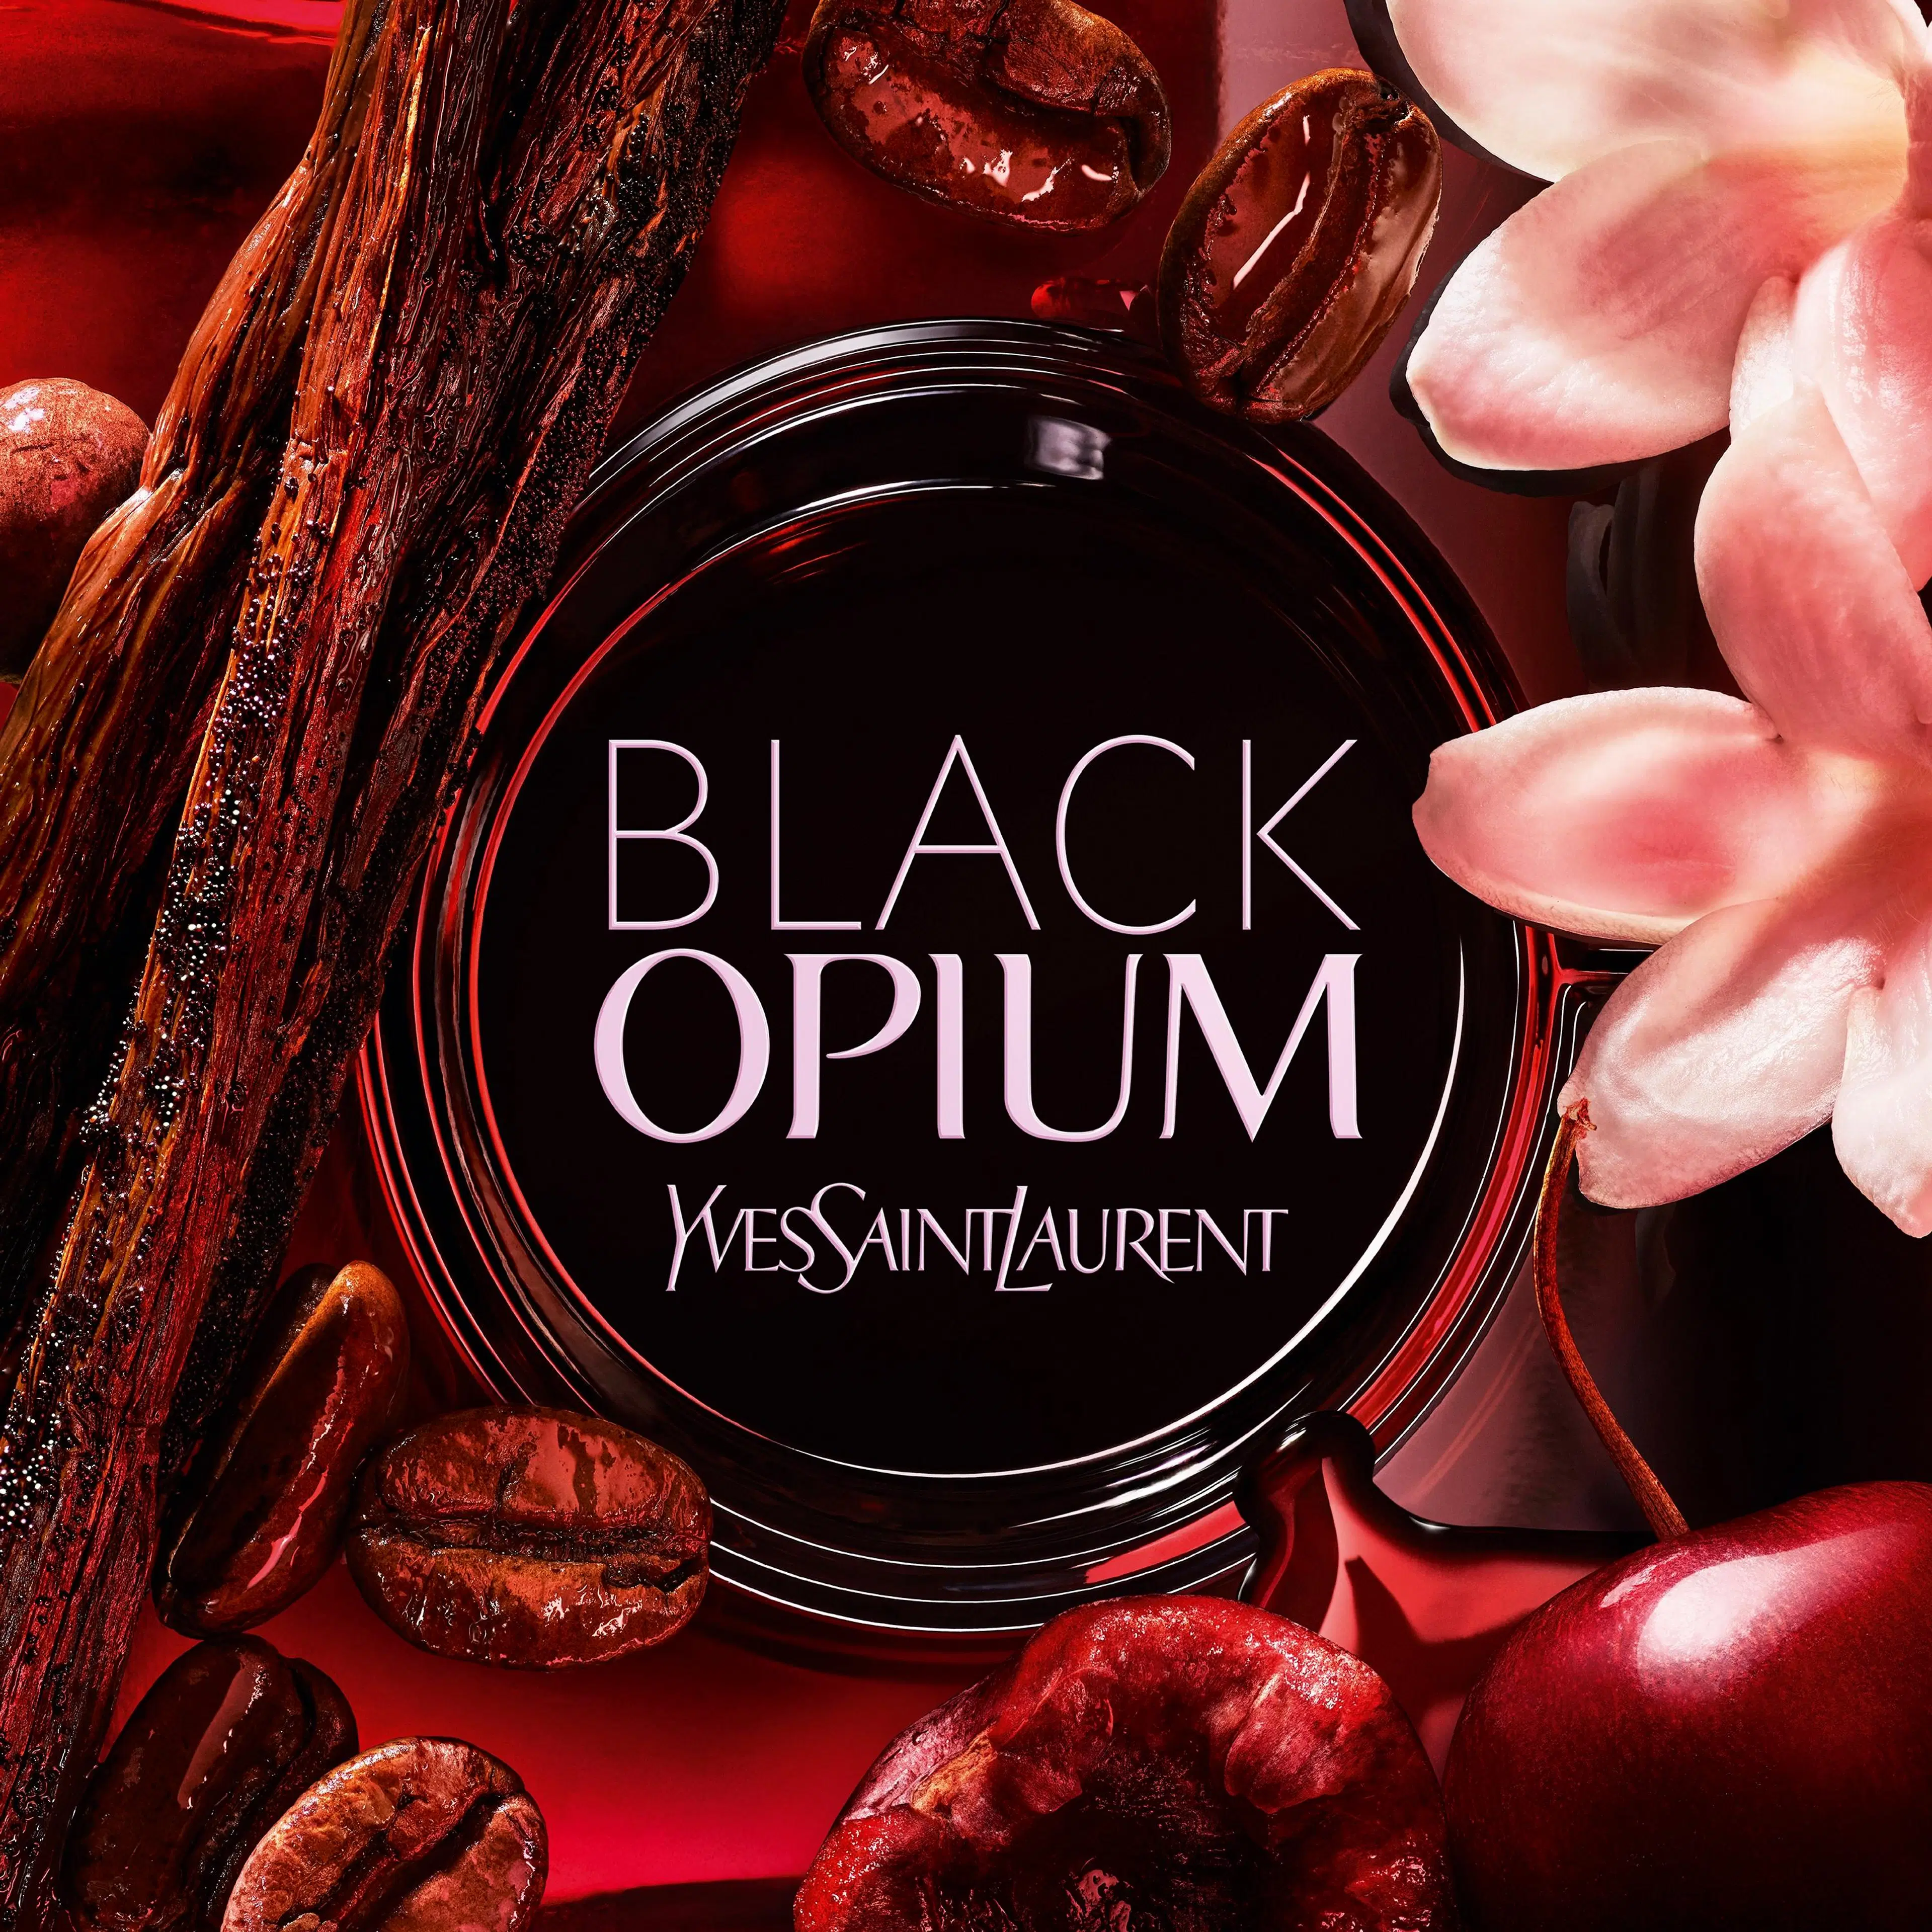 Yves Saint Laurent Black Opium Over Red EdP tuoksu 30 ml